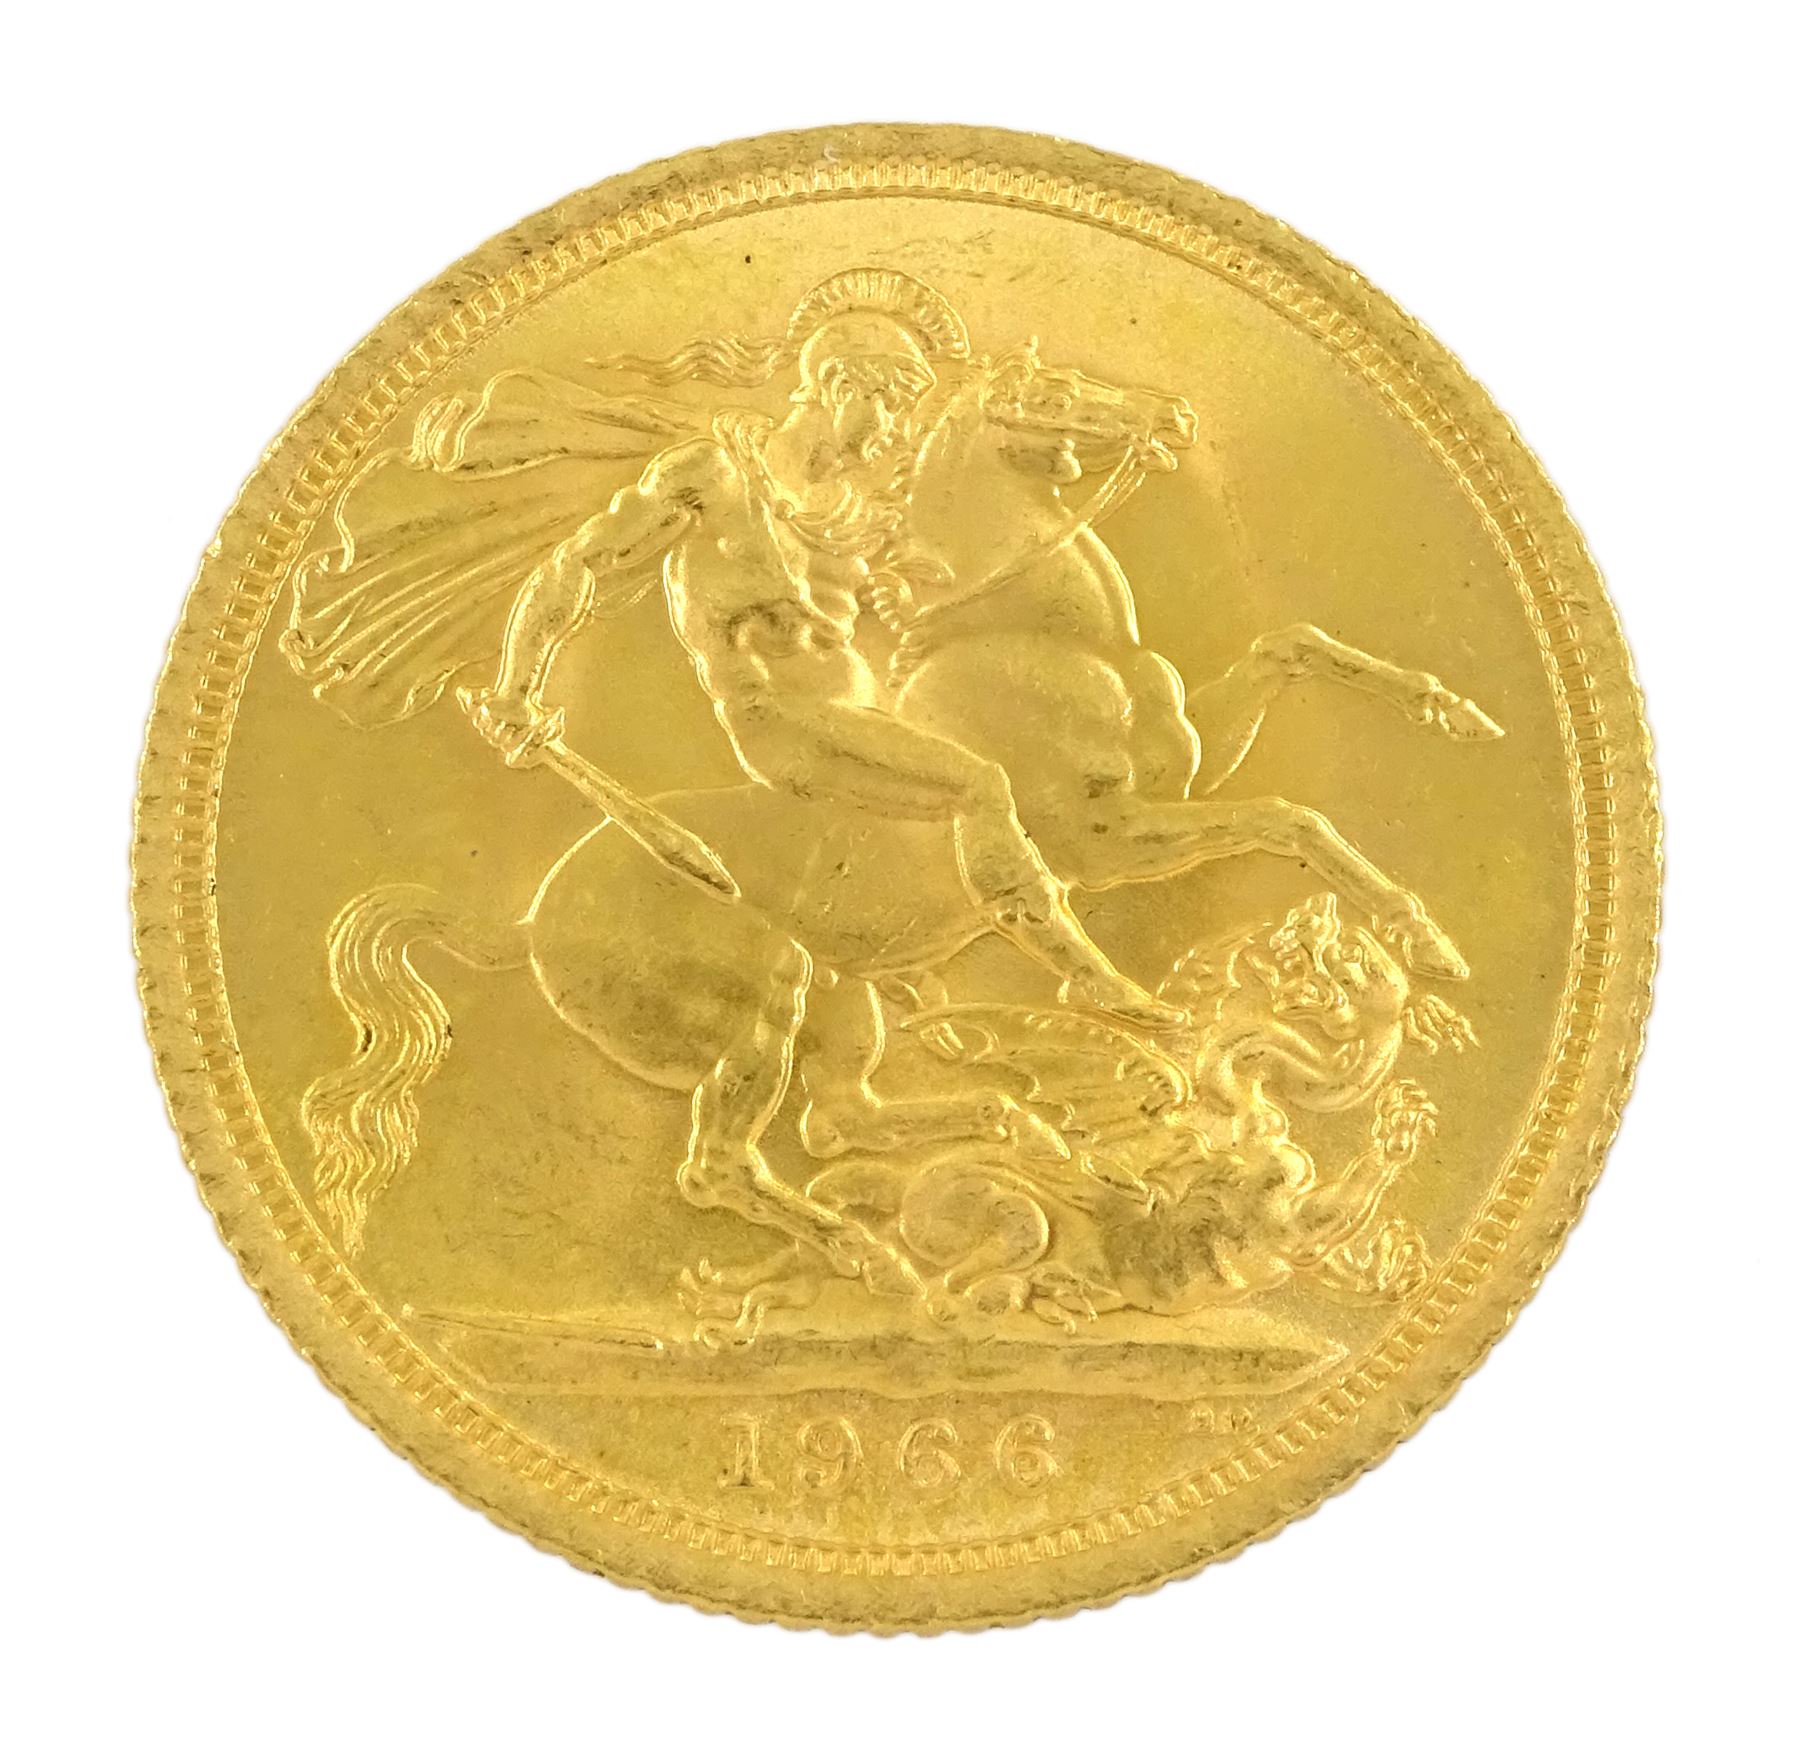 Queen Elizabeth II 1966 gold full sovereign coin - Image 2 of 2